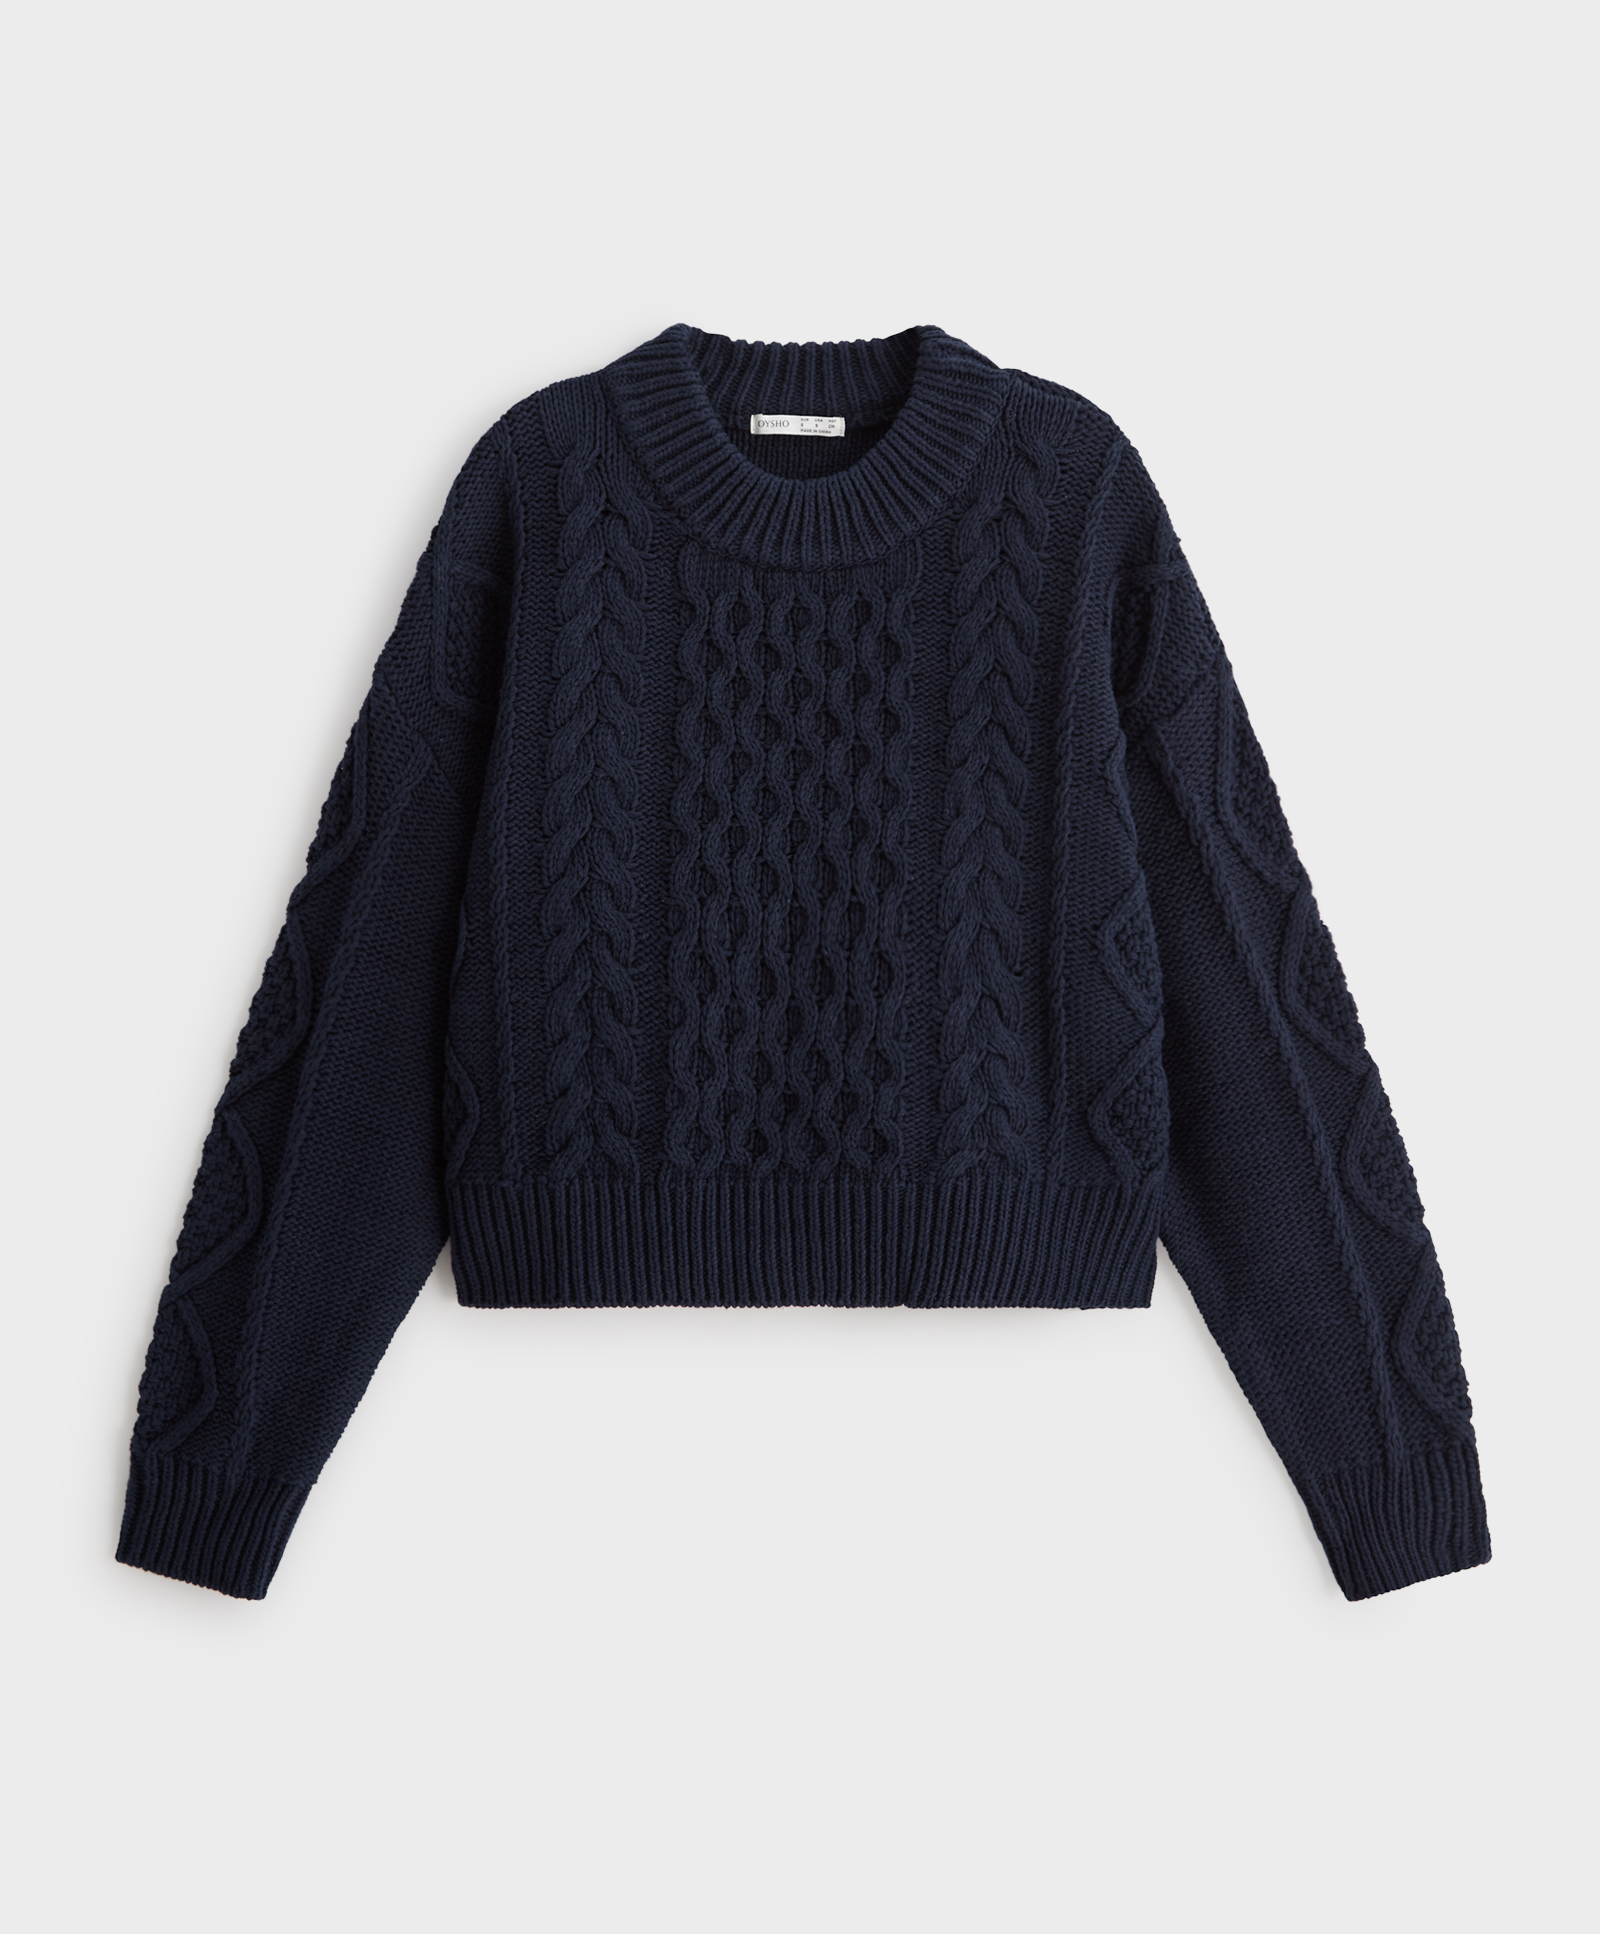 100% cotton knit jumper